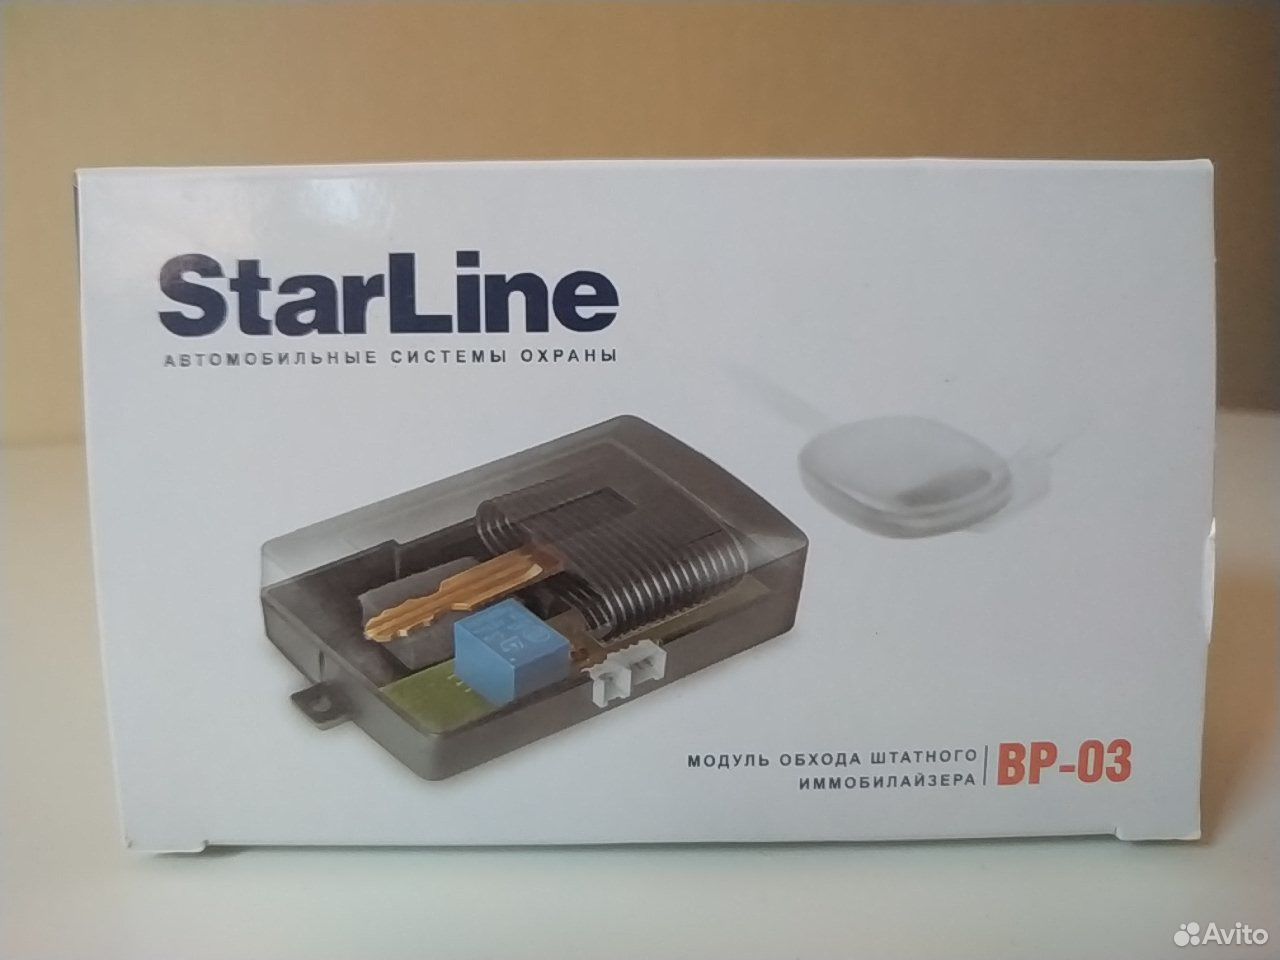 Обход иммобилайзера starline. Модуль обхода иммобилайзера STARLINE BP-03. Модуль обхода иммобилайзера 'STARLINE' bp3. Модуль обхода штатного иммобилайзера STARLINE. Старлайн обходчик иммобилайзера BP 03.